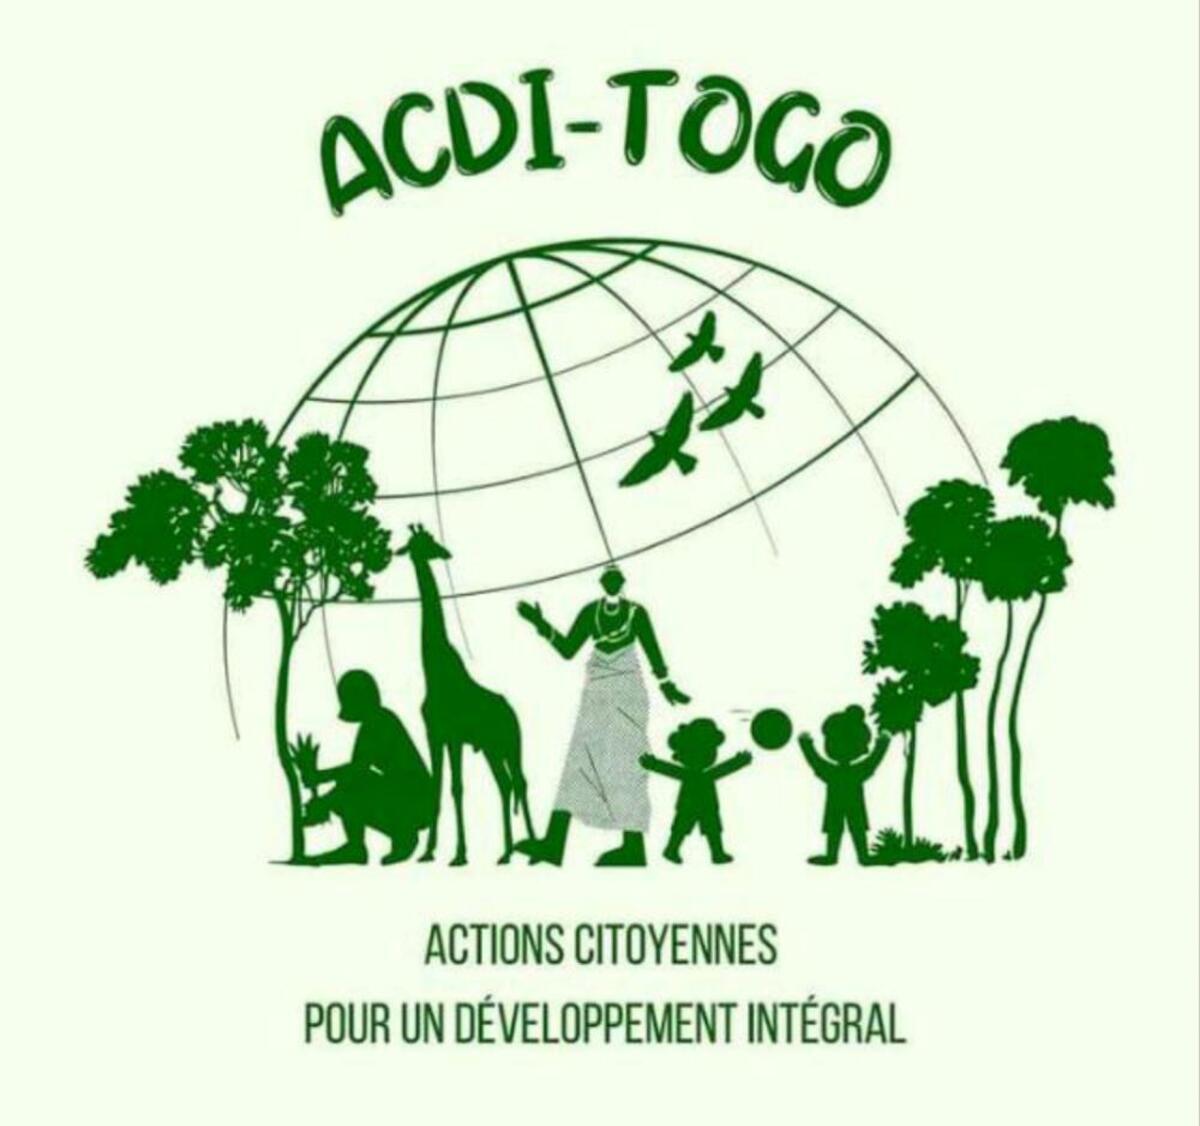 ACDI-TOGO